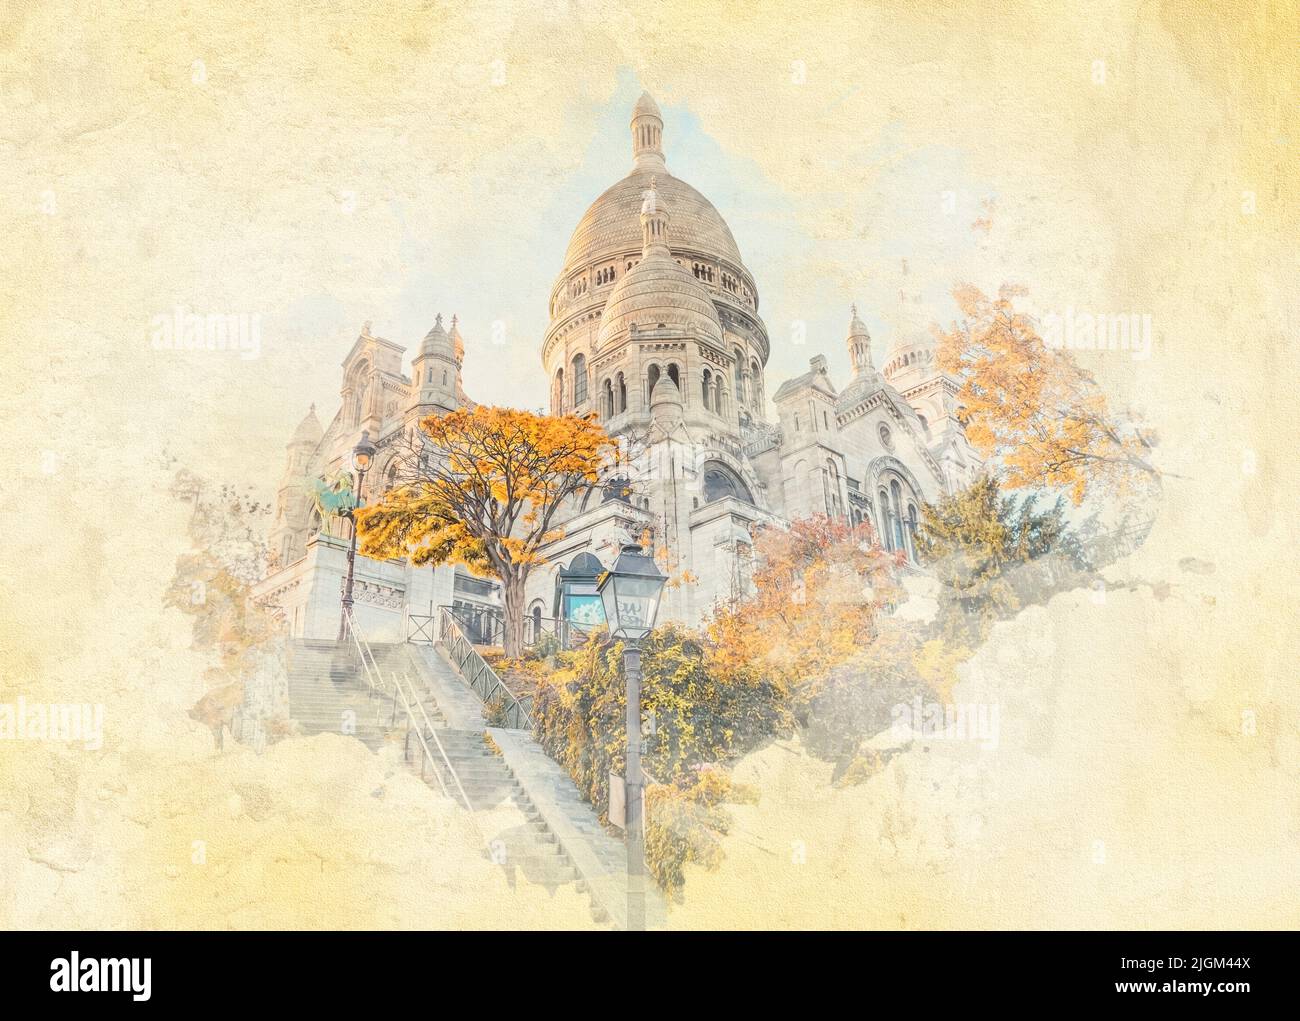 Sacre Coeur Basilica in Montmartre, Paris - Watercolor effect illustration Stock Photo